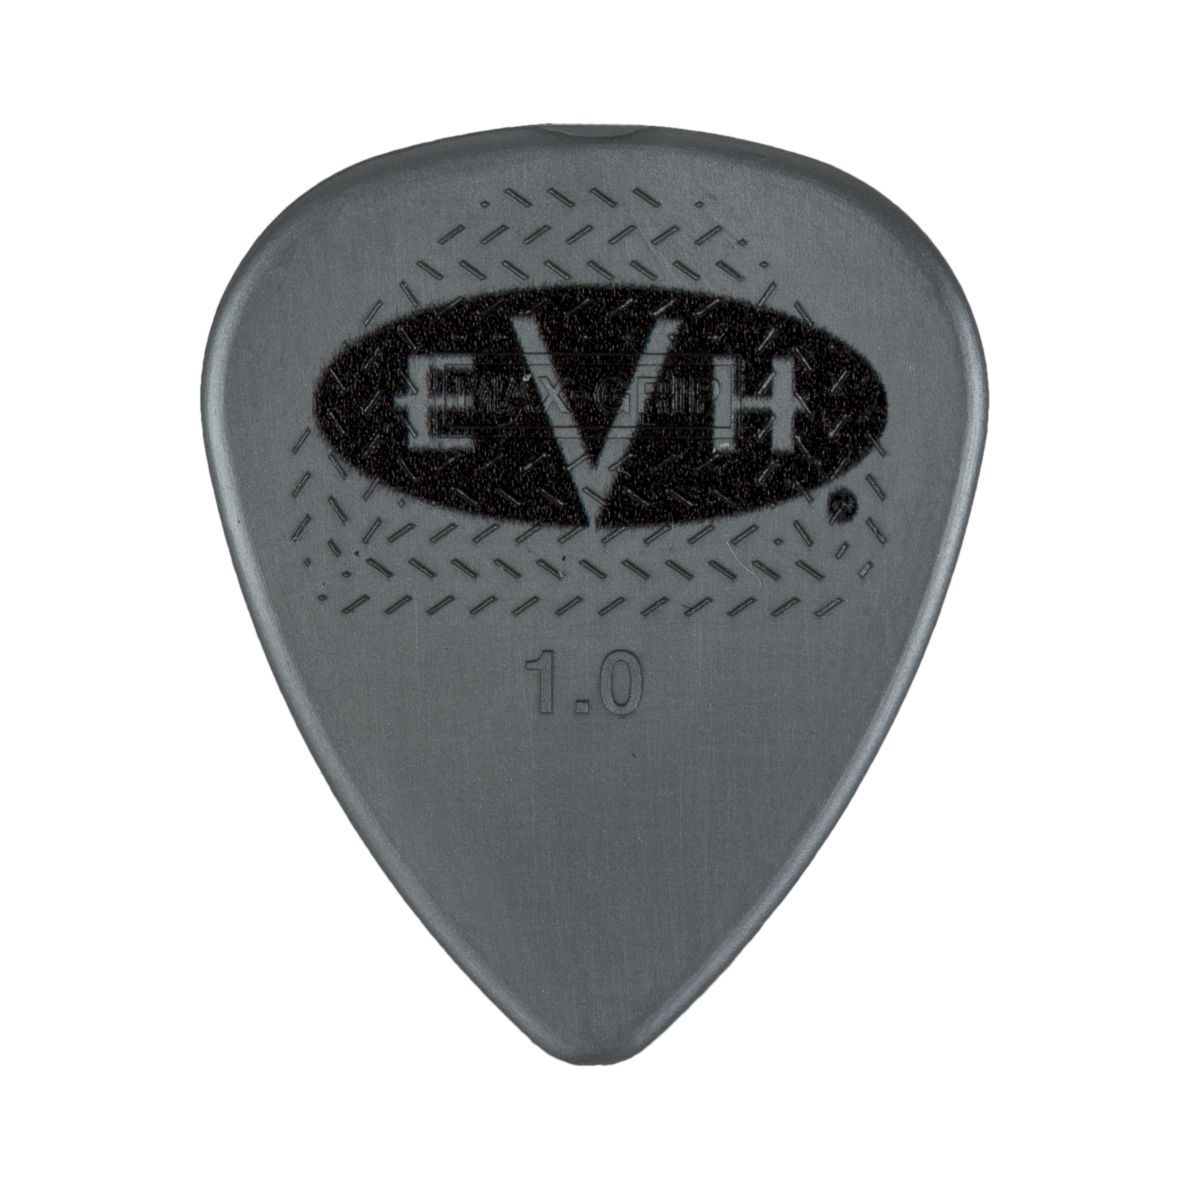 EVH Signature Picks Gray/Black 1.00 mm